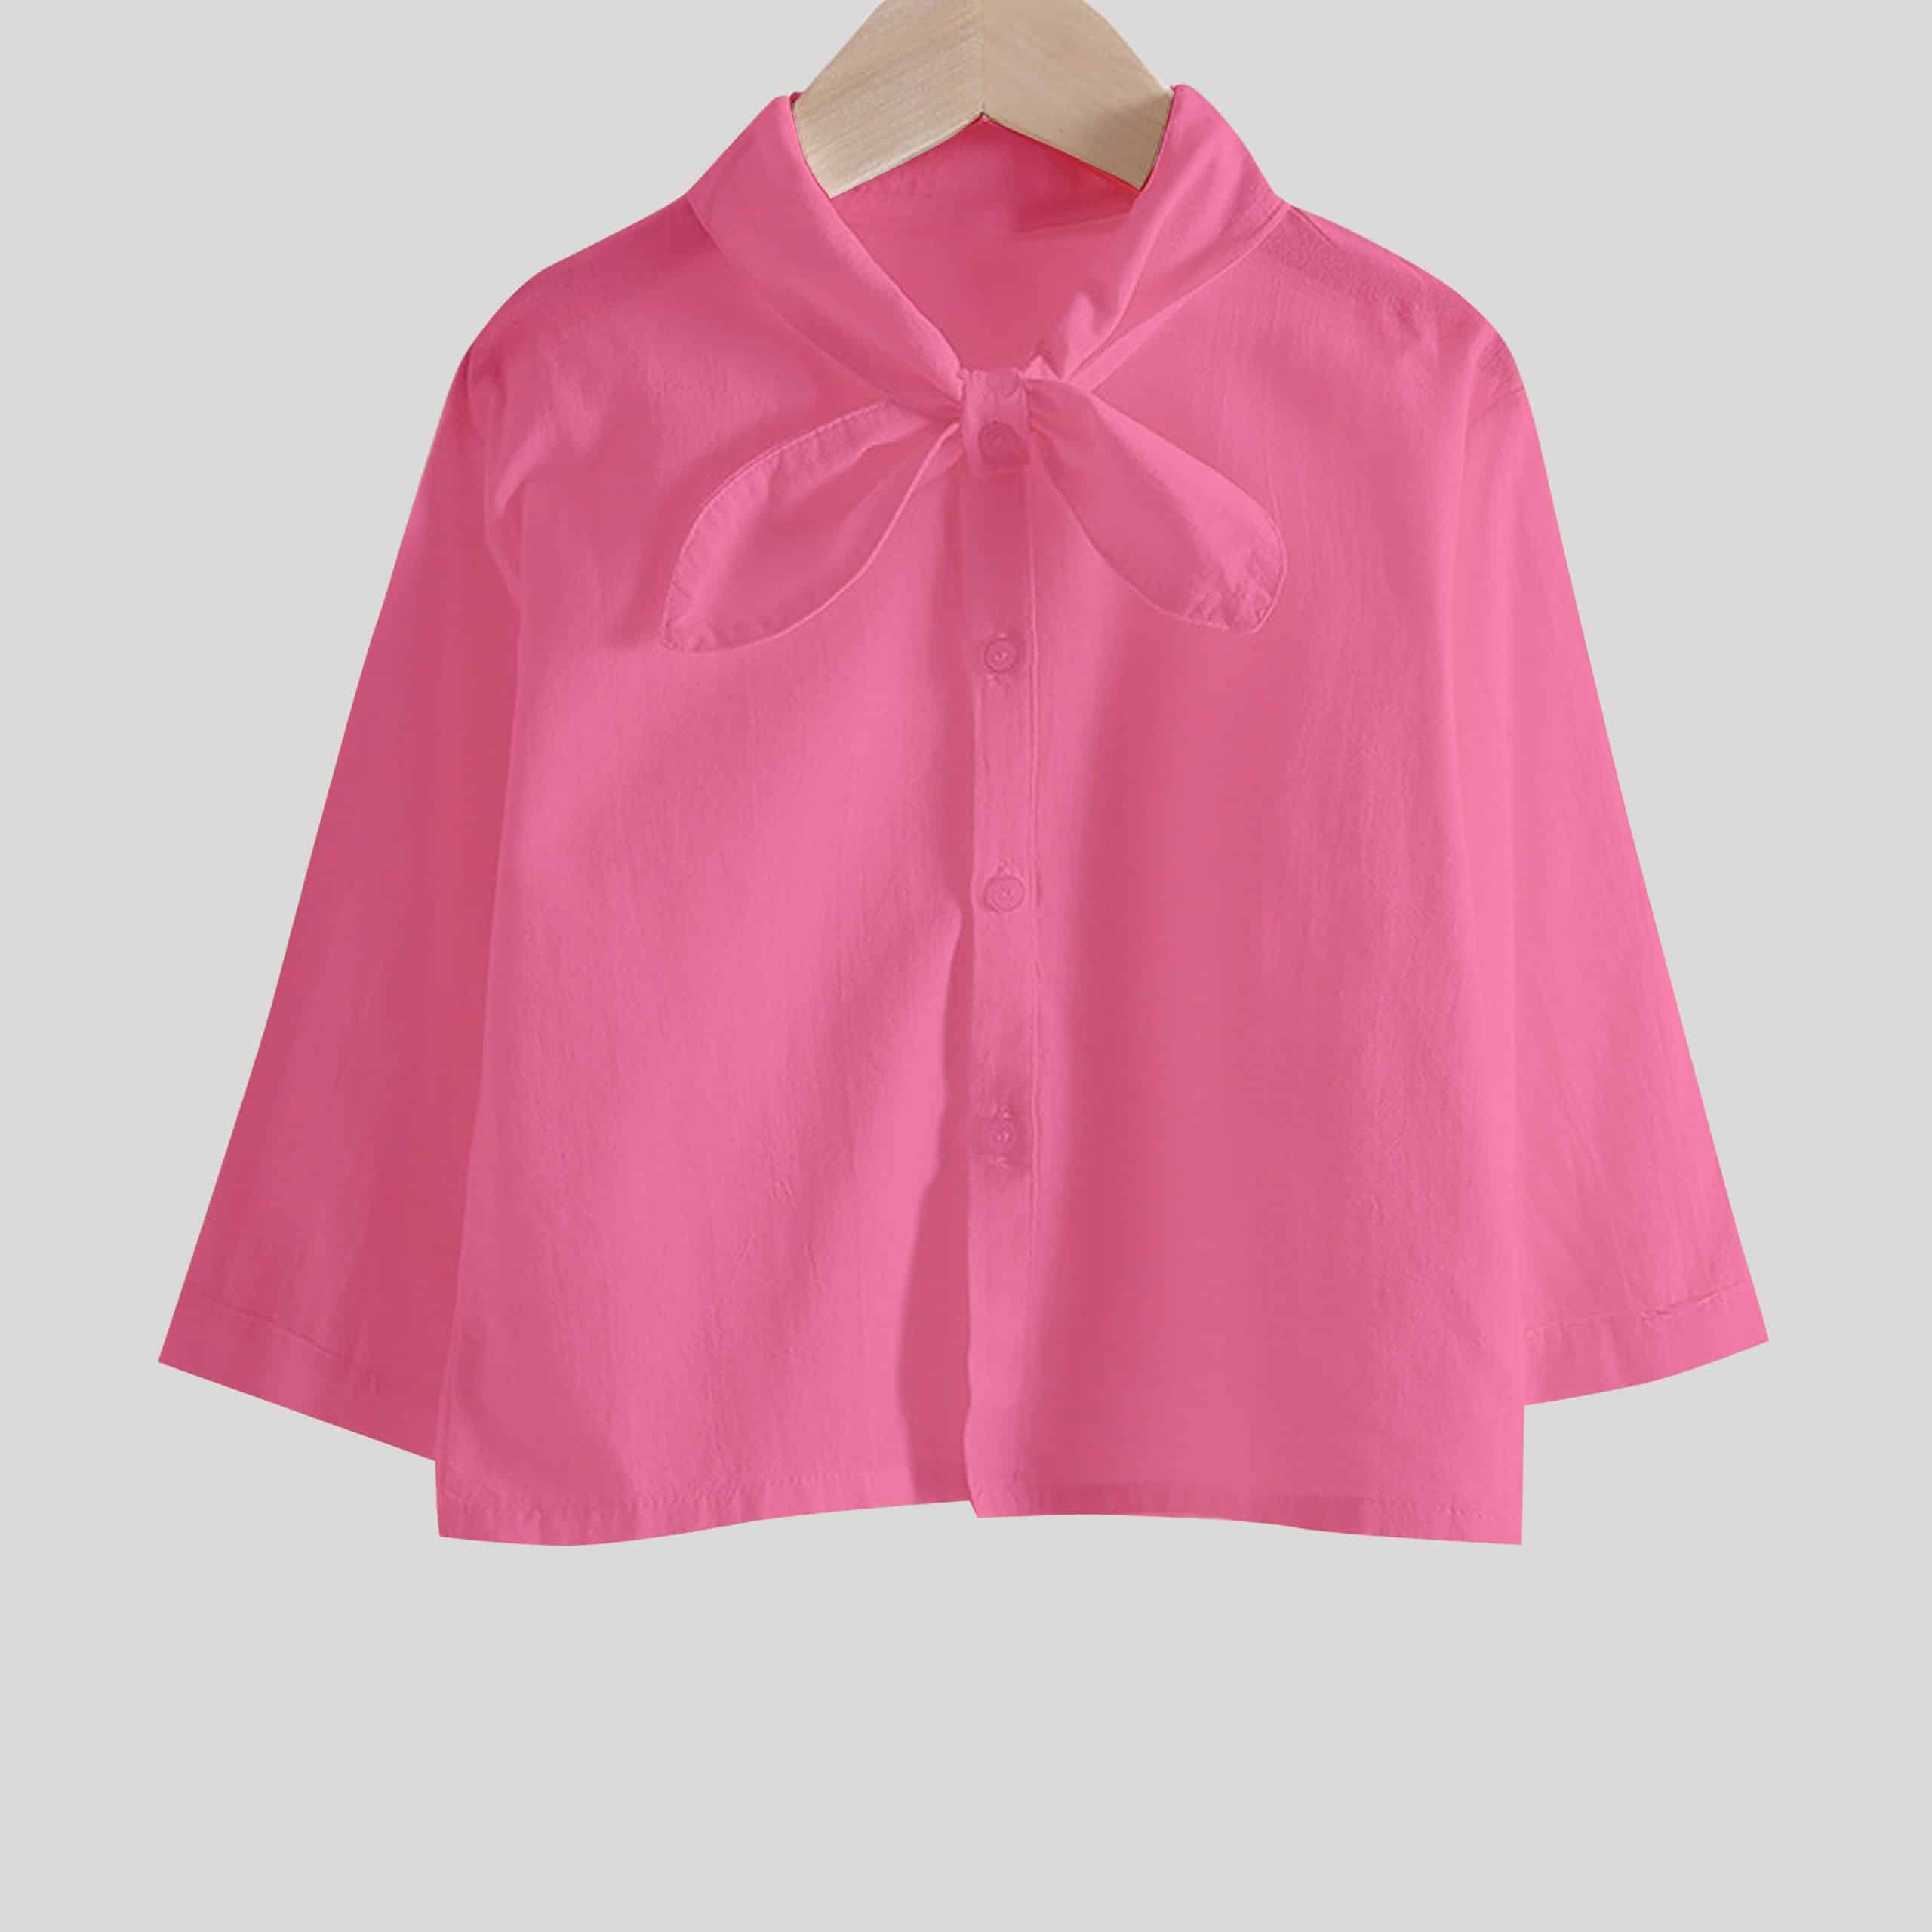 Girls pink Shirt top with top - RKFCW295